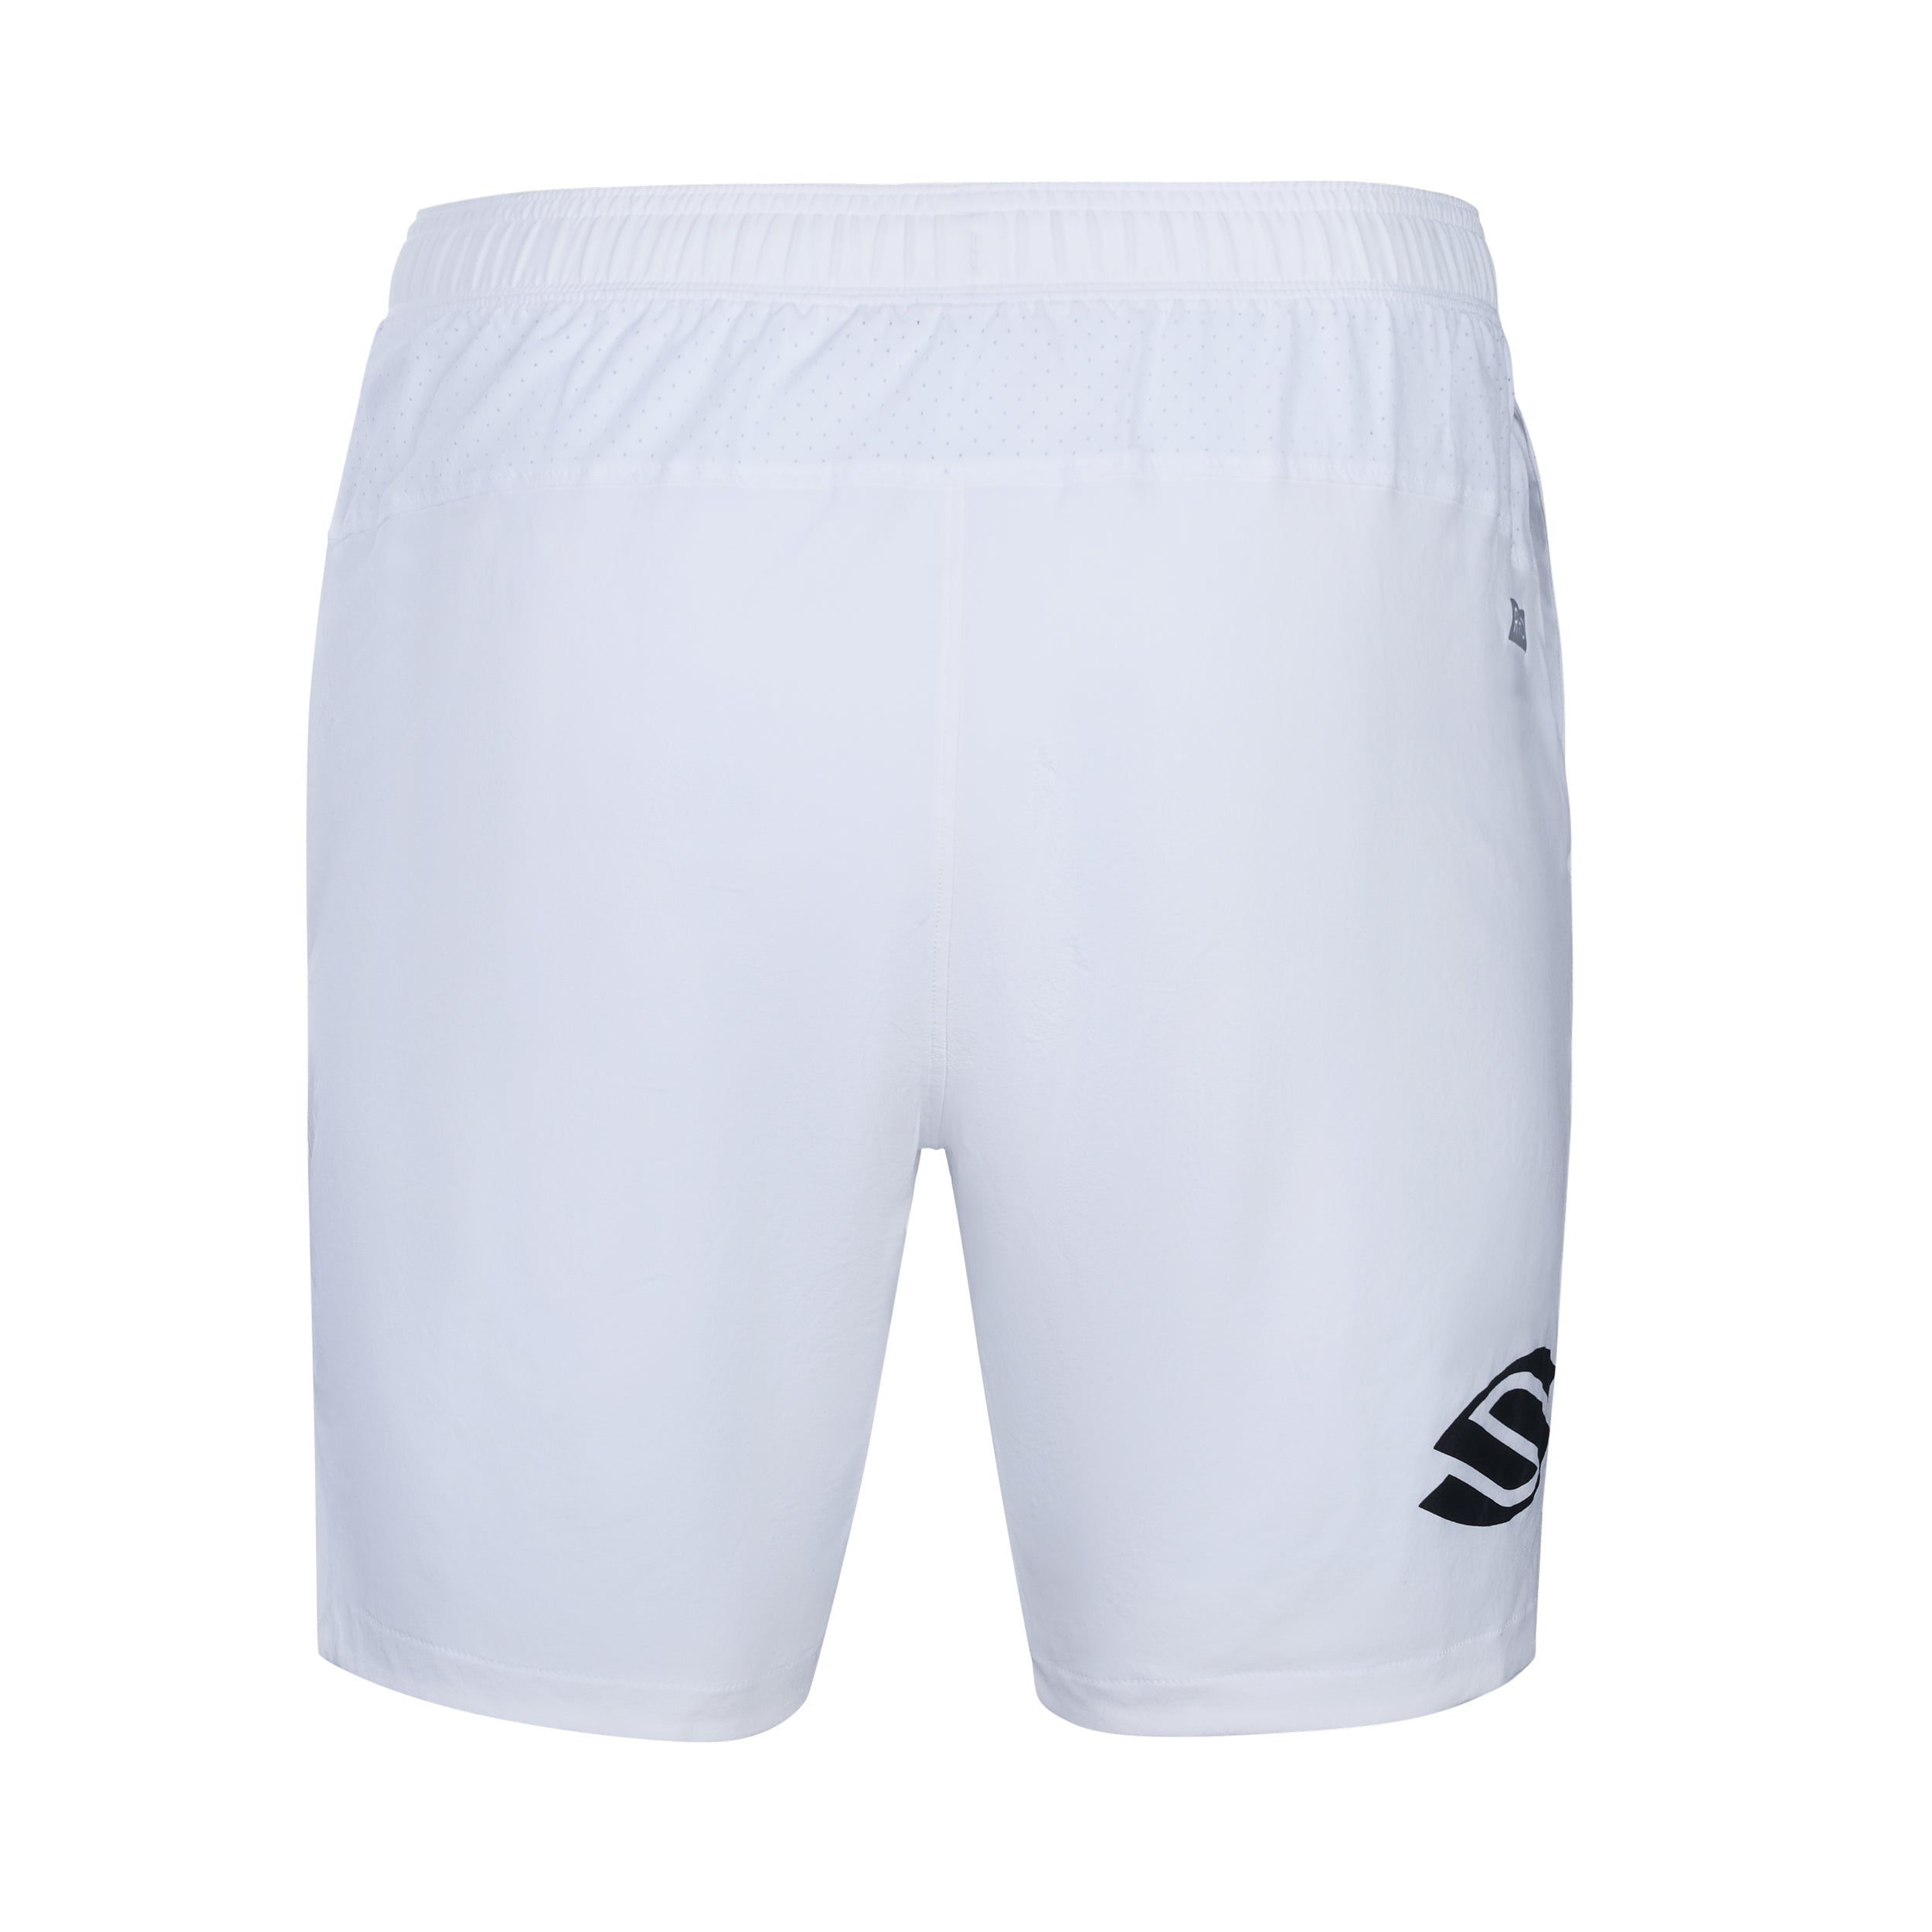 White Selkirk x Rhone Men’s 7” Backspin Shorts